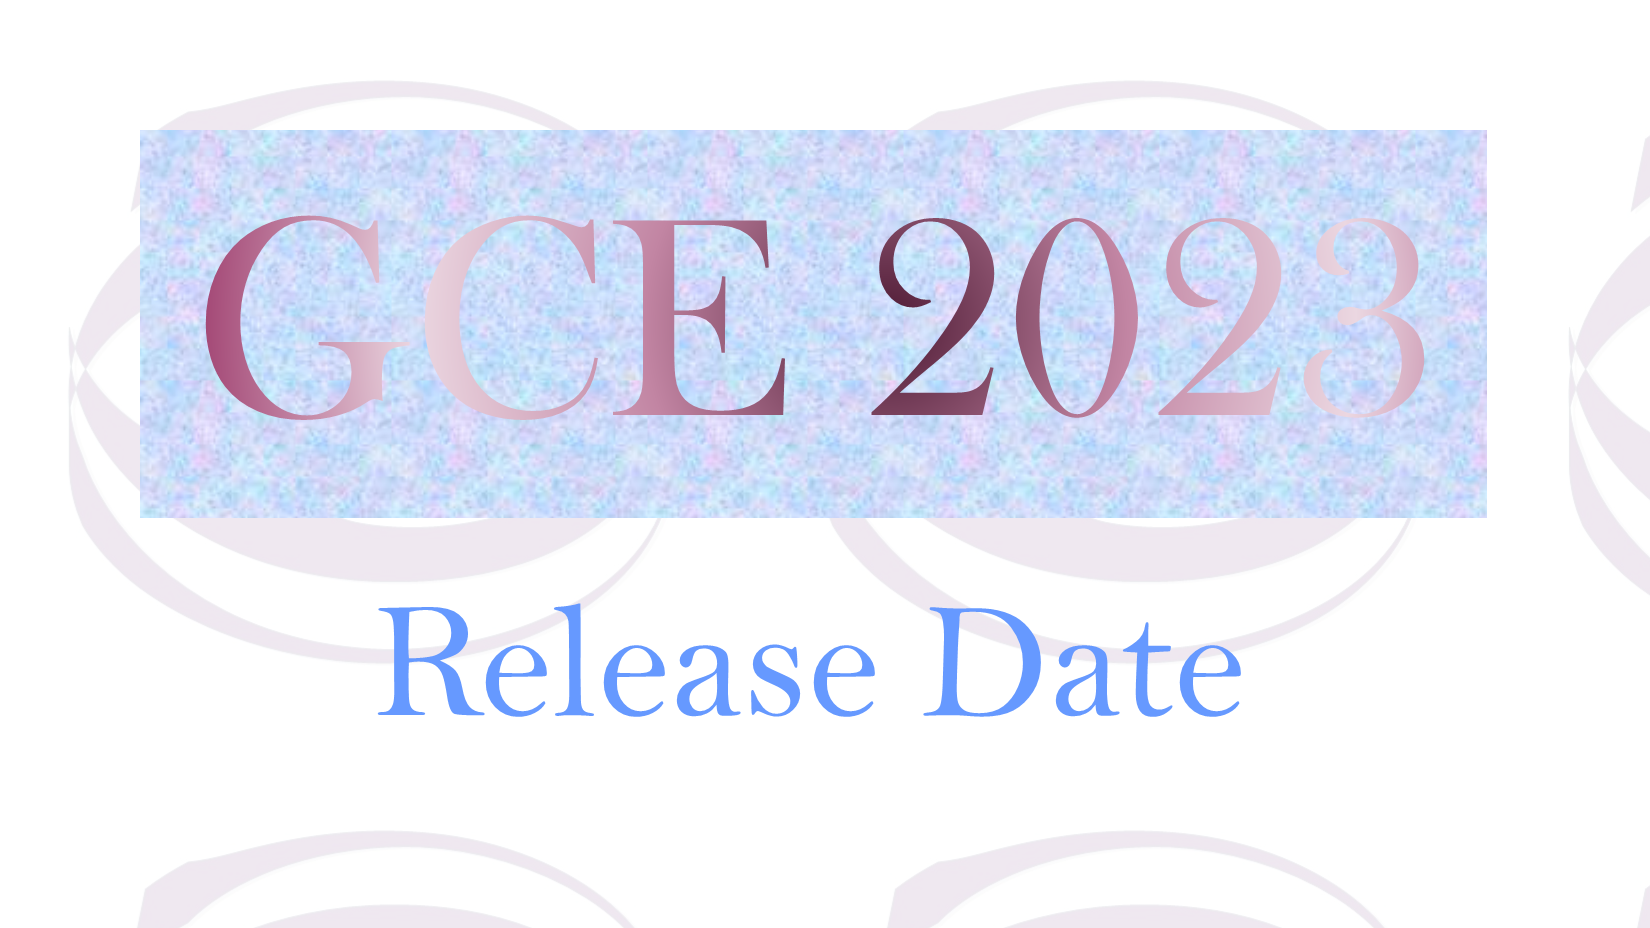 Blog Imageuploads/blogs/GCE 2023 release date.png